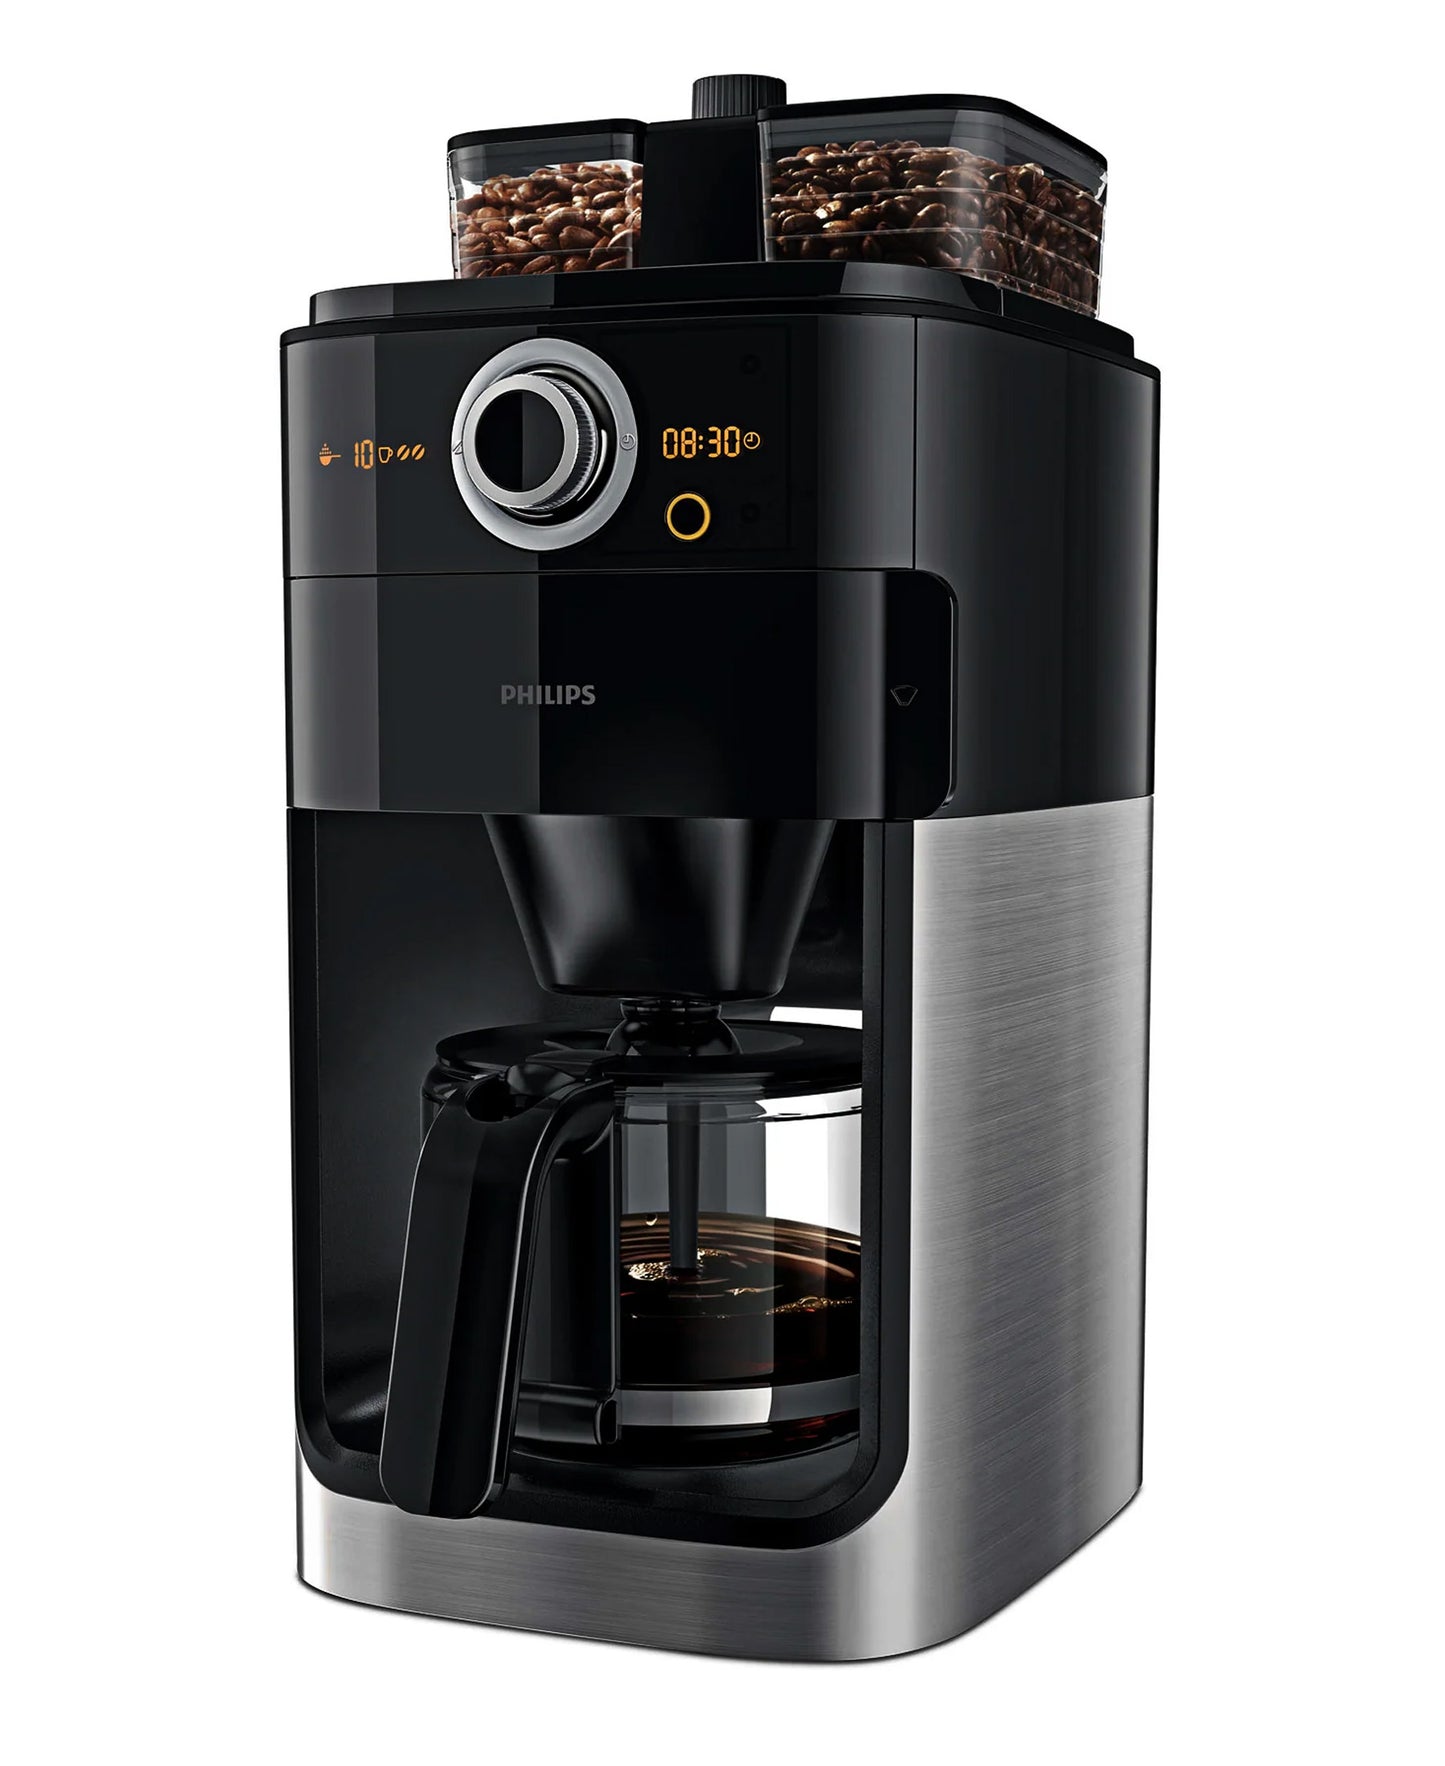 Philips Grind & Brew Coffee Machine - Black